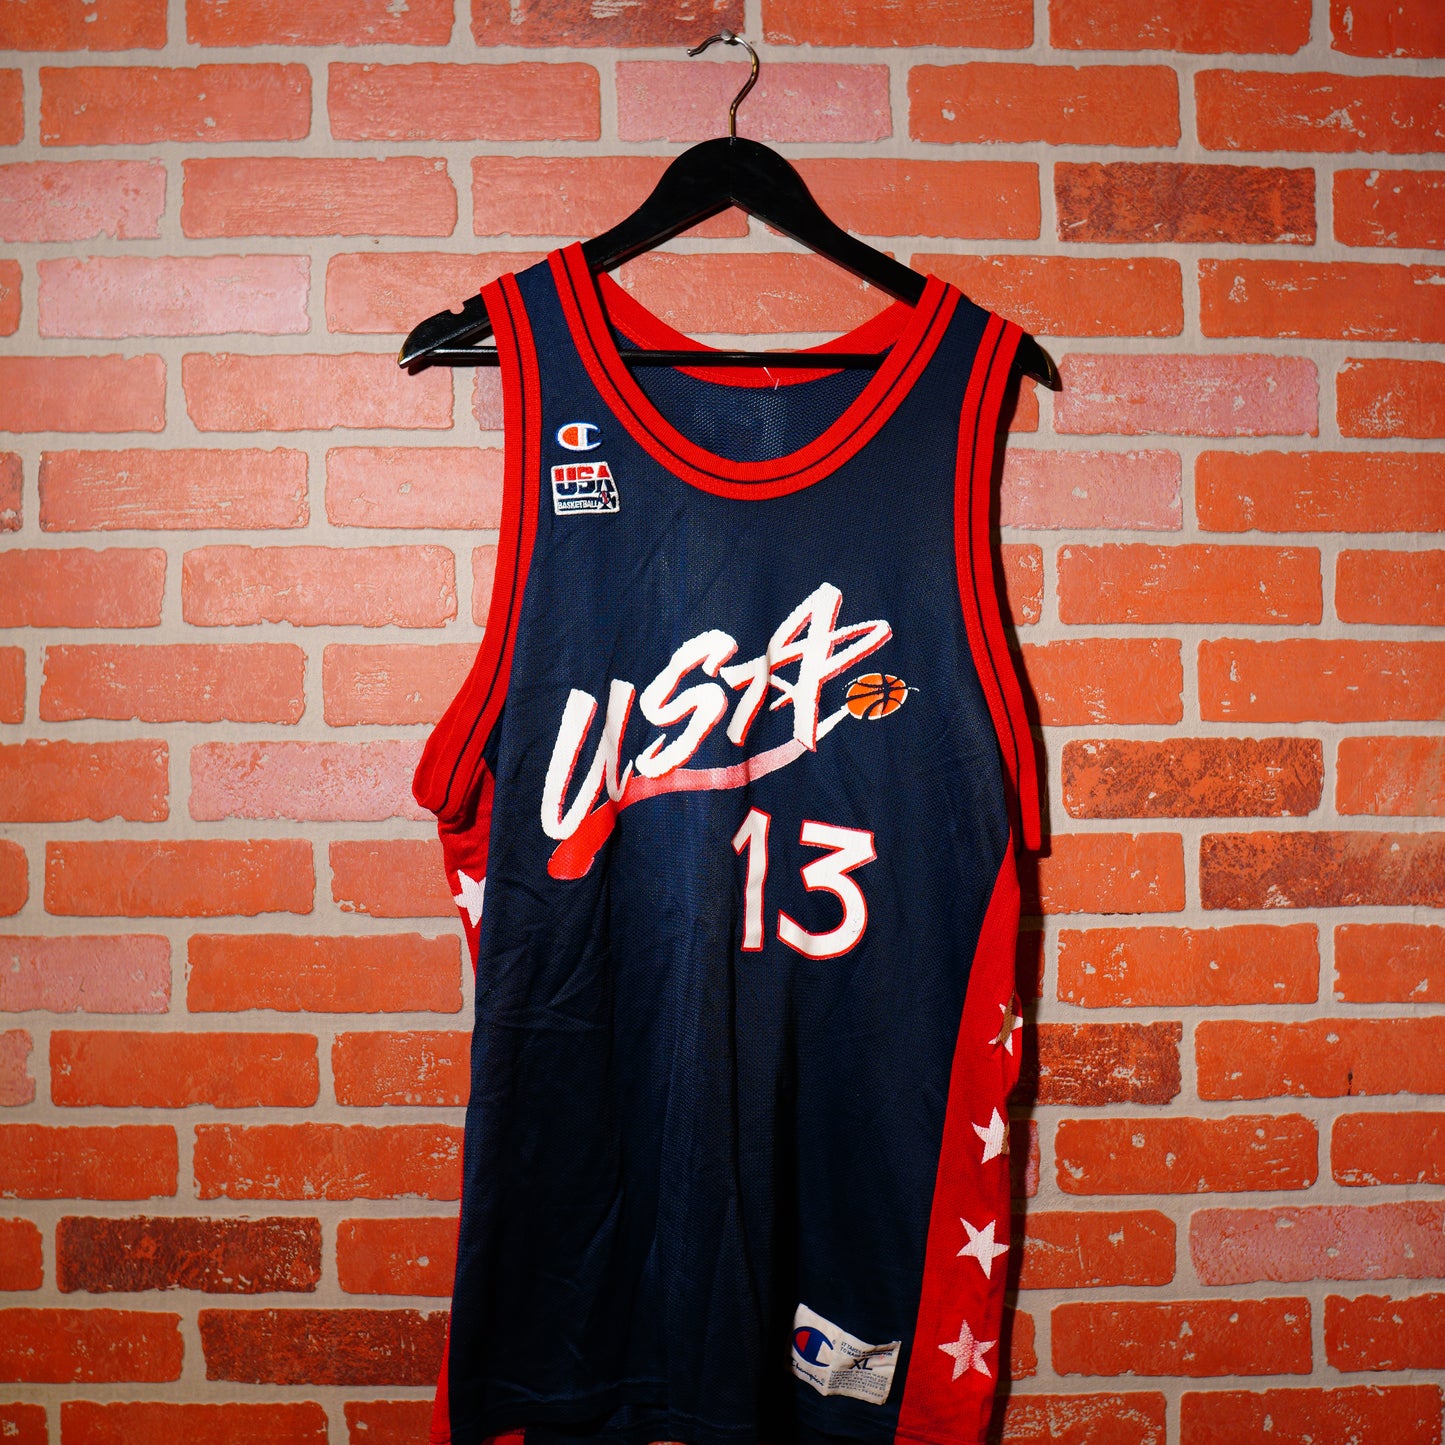 VTG Champion USA Basketball Shaq Jersey